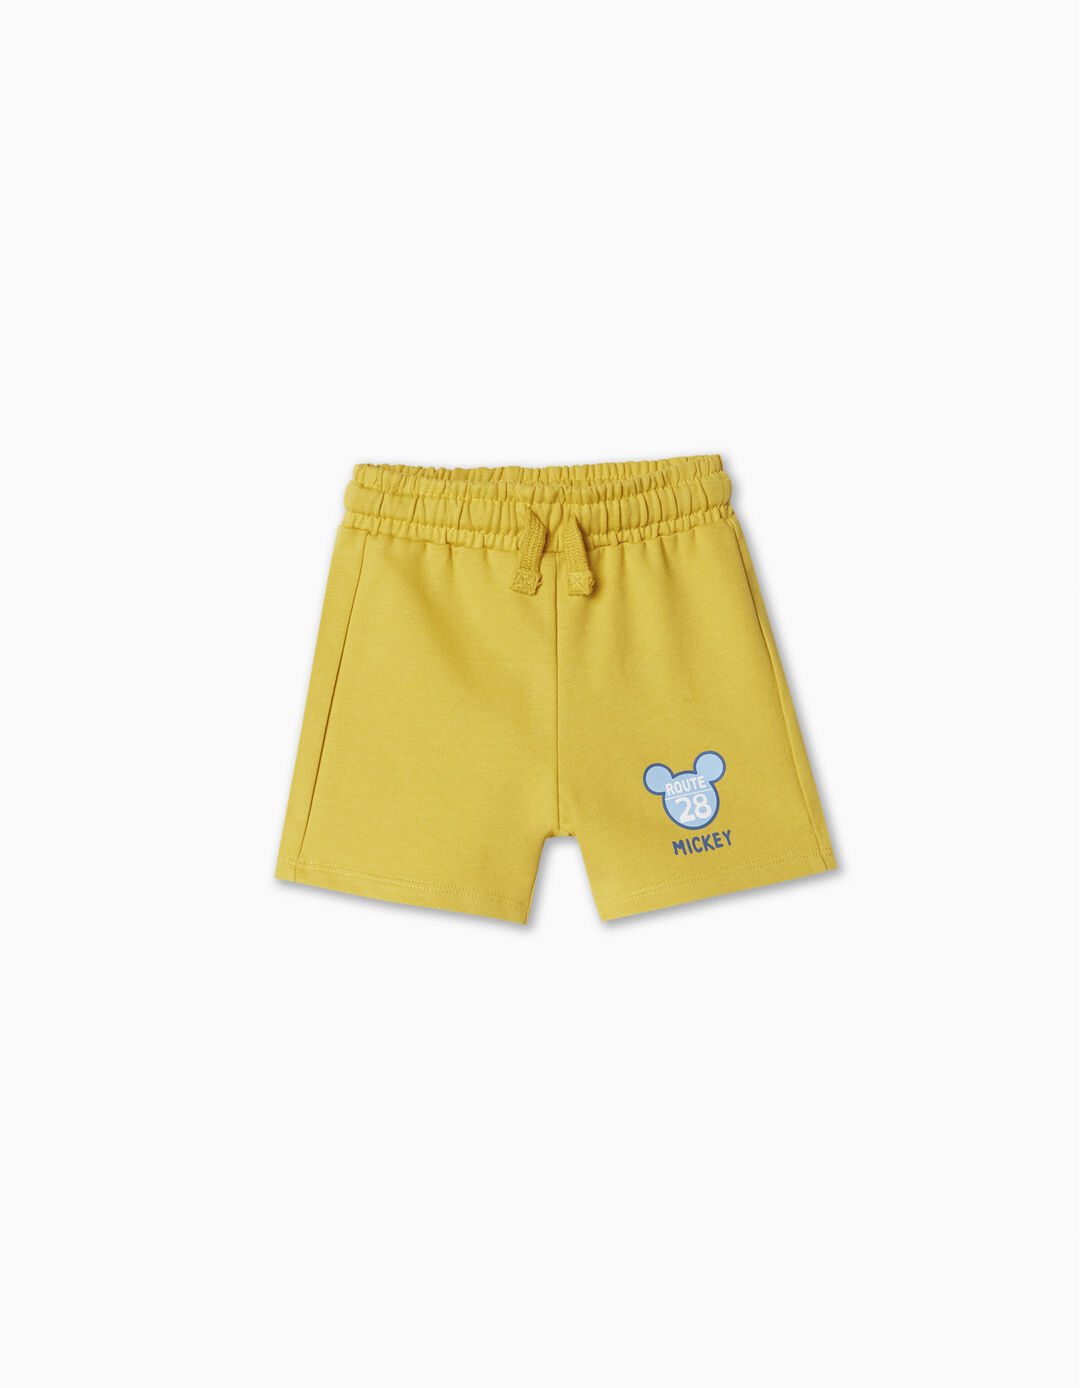 'Disney' Shorts, Baby Boy, Yellow